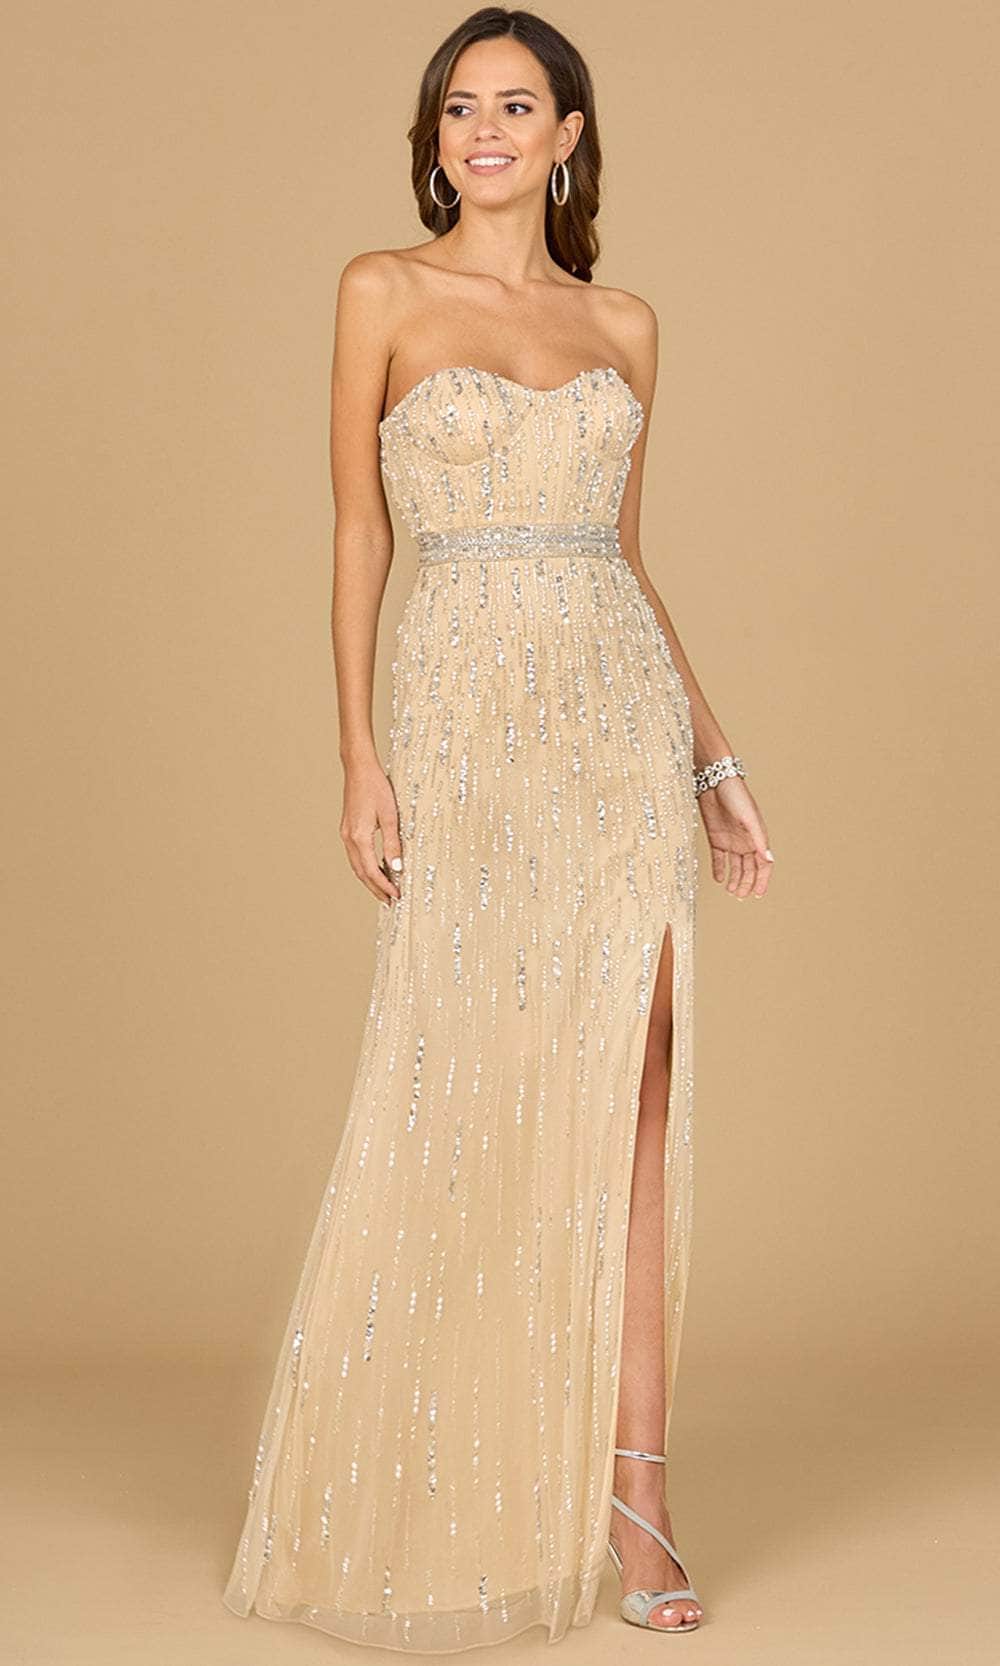 Lara Dresses 29035 - Strapless Beaded Evening Gown
